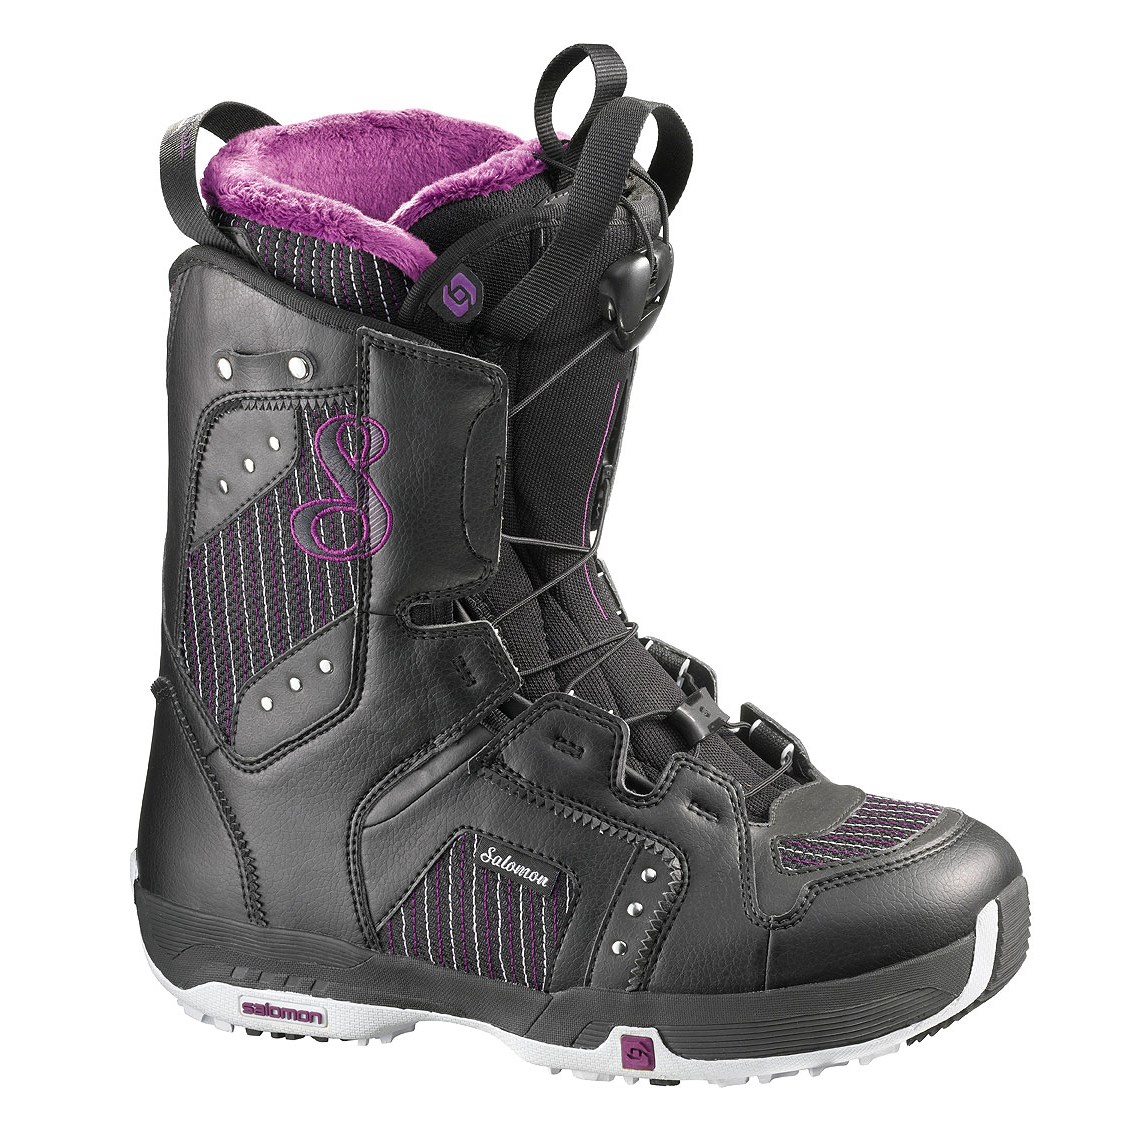 Salomon Snowboard Boots - Women's 2010 | evo